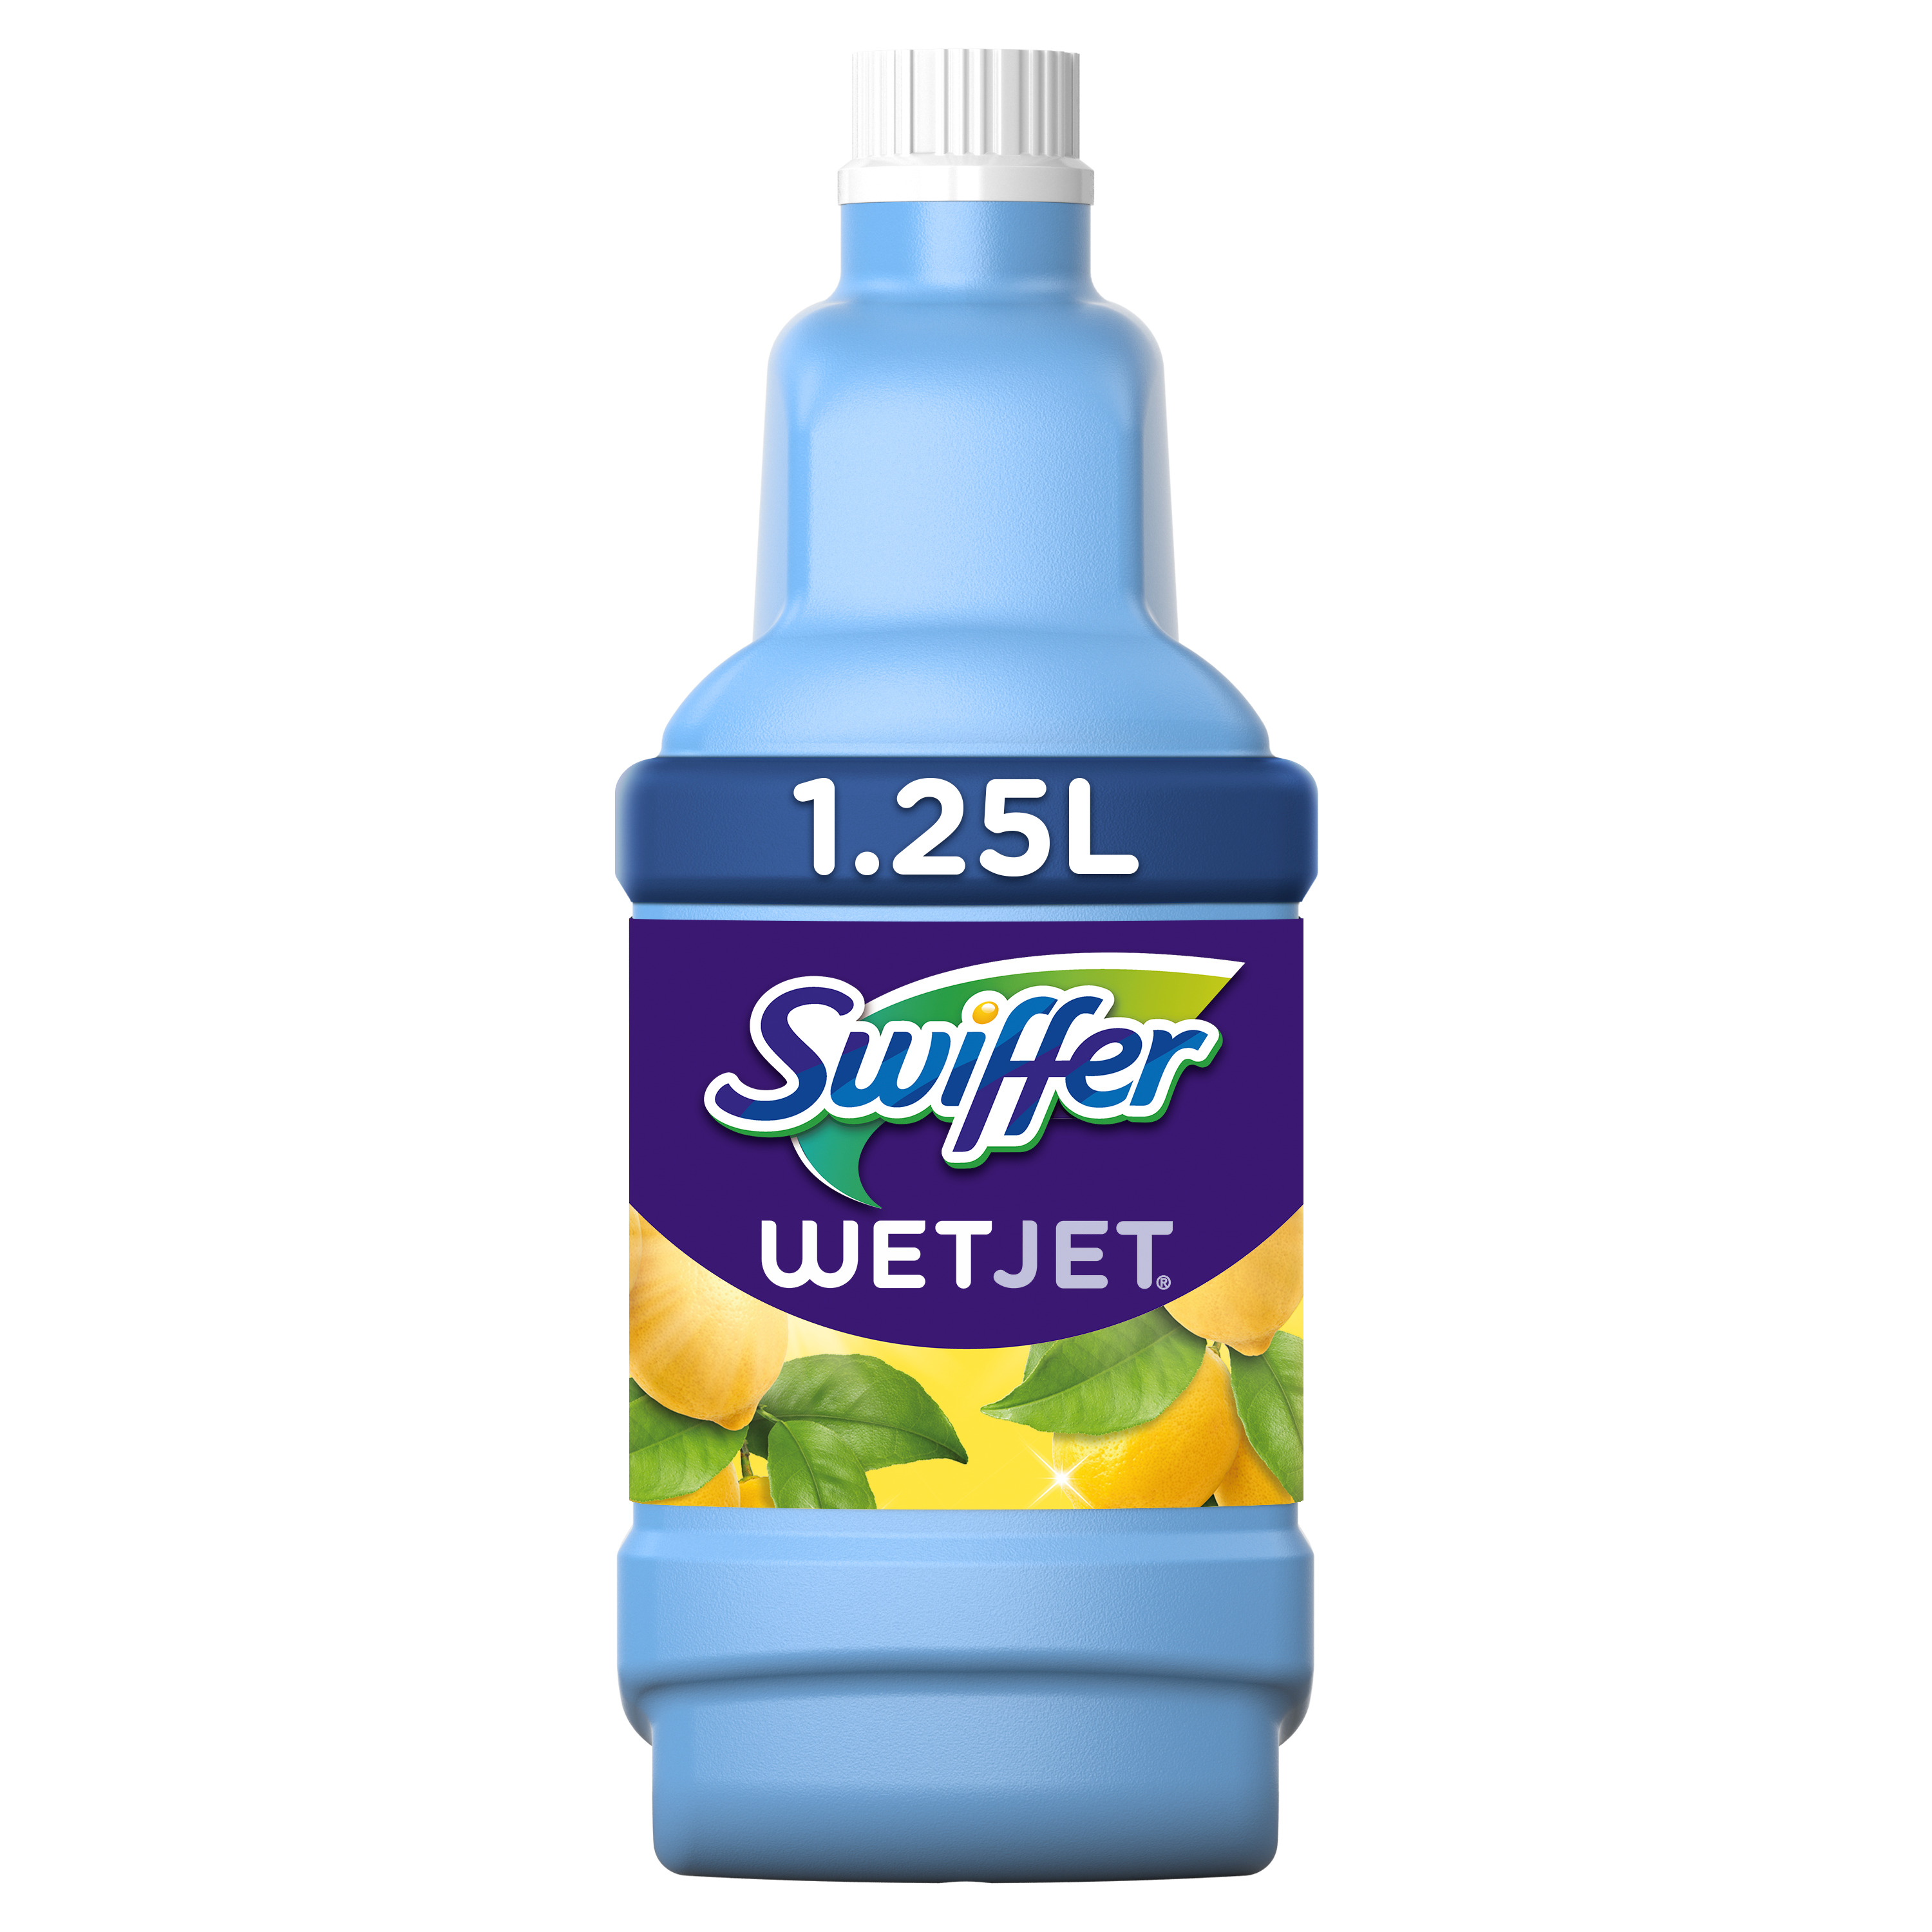 Promo Swiffer balai swiffer wet kit chez E.Leclerc